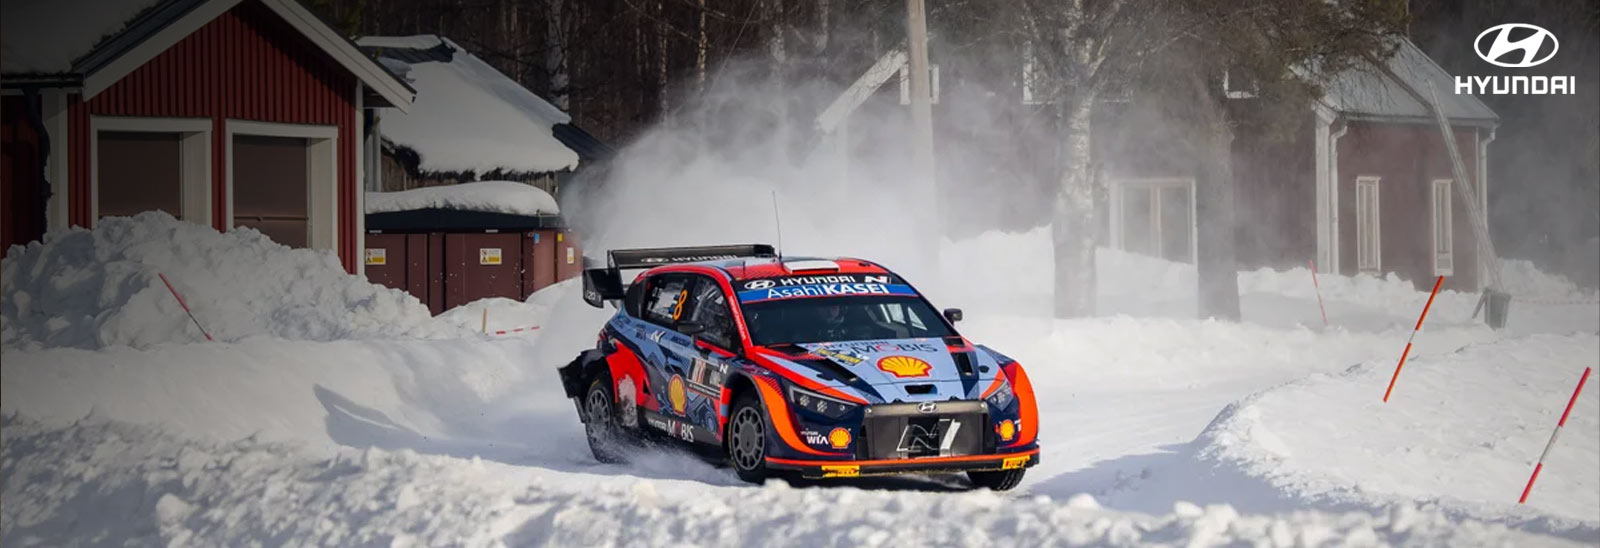 Auto Hyundai i20 en circuito de nieve para WRC